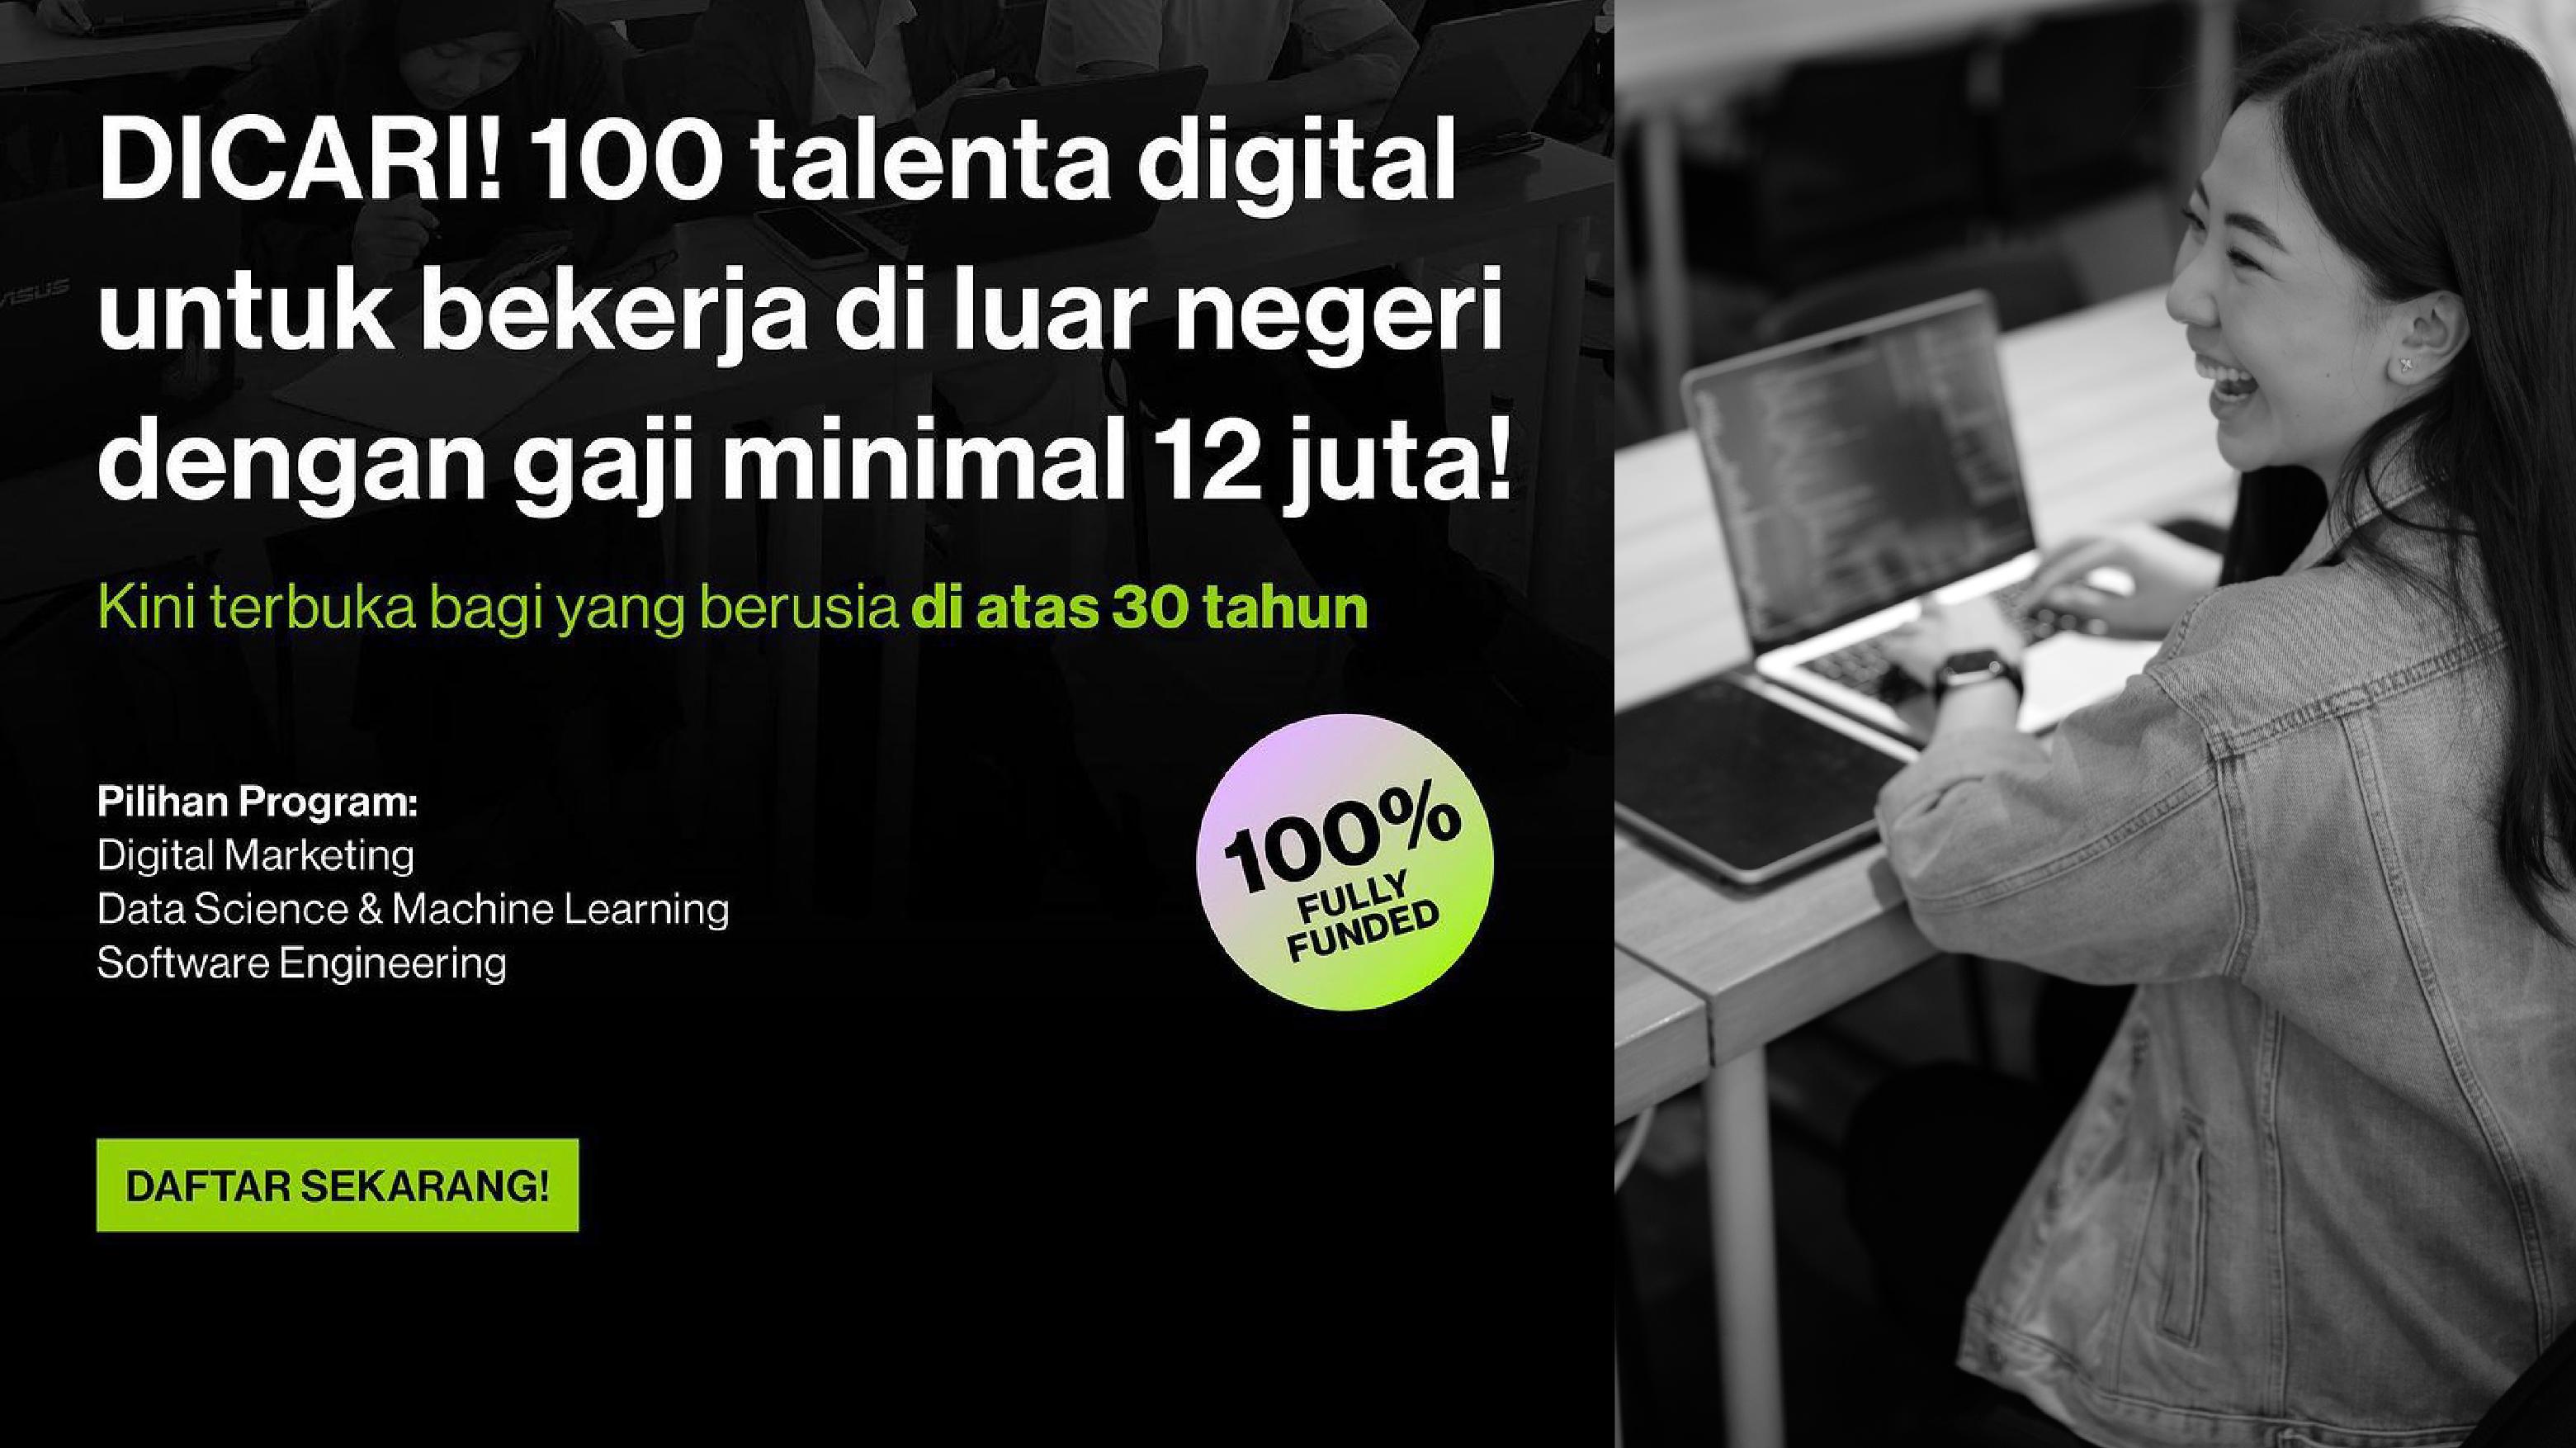 Purwadhika Digital Technology School Siap Memberi Beasiswa Penuh untuk 100 Talent Digital